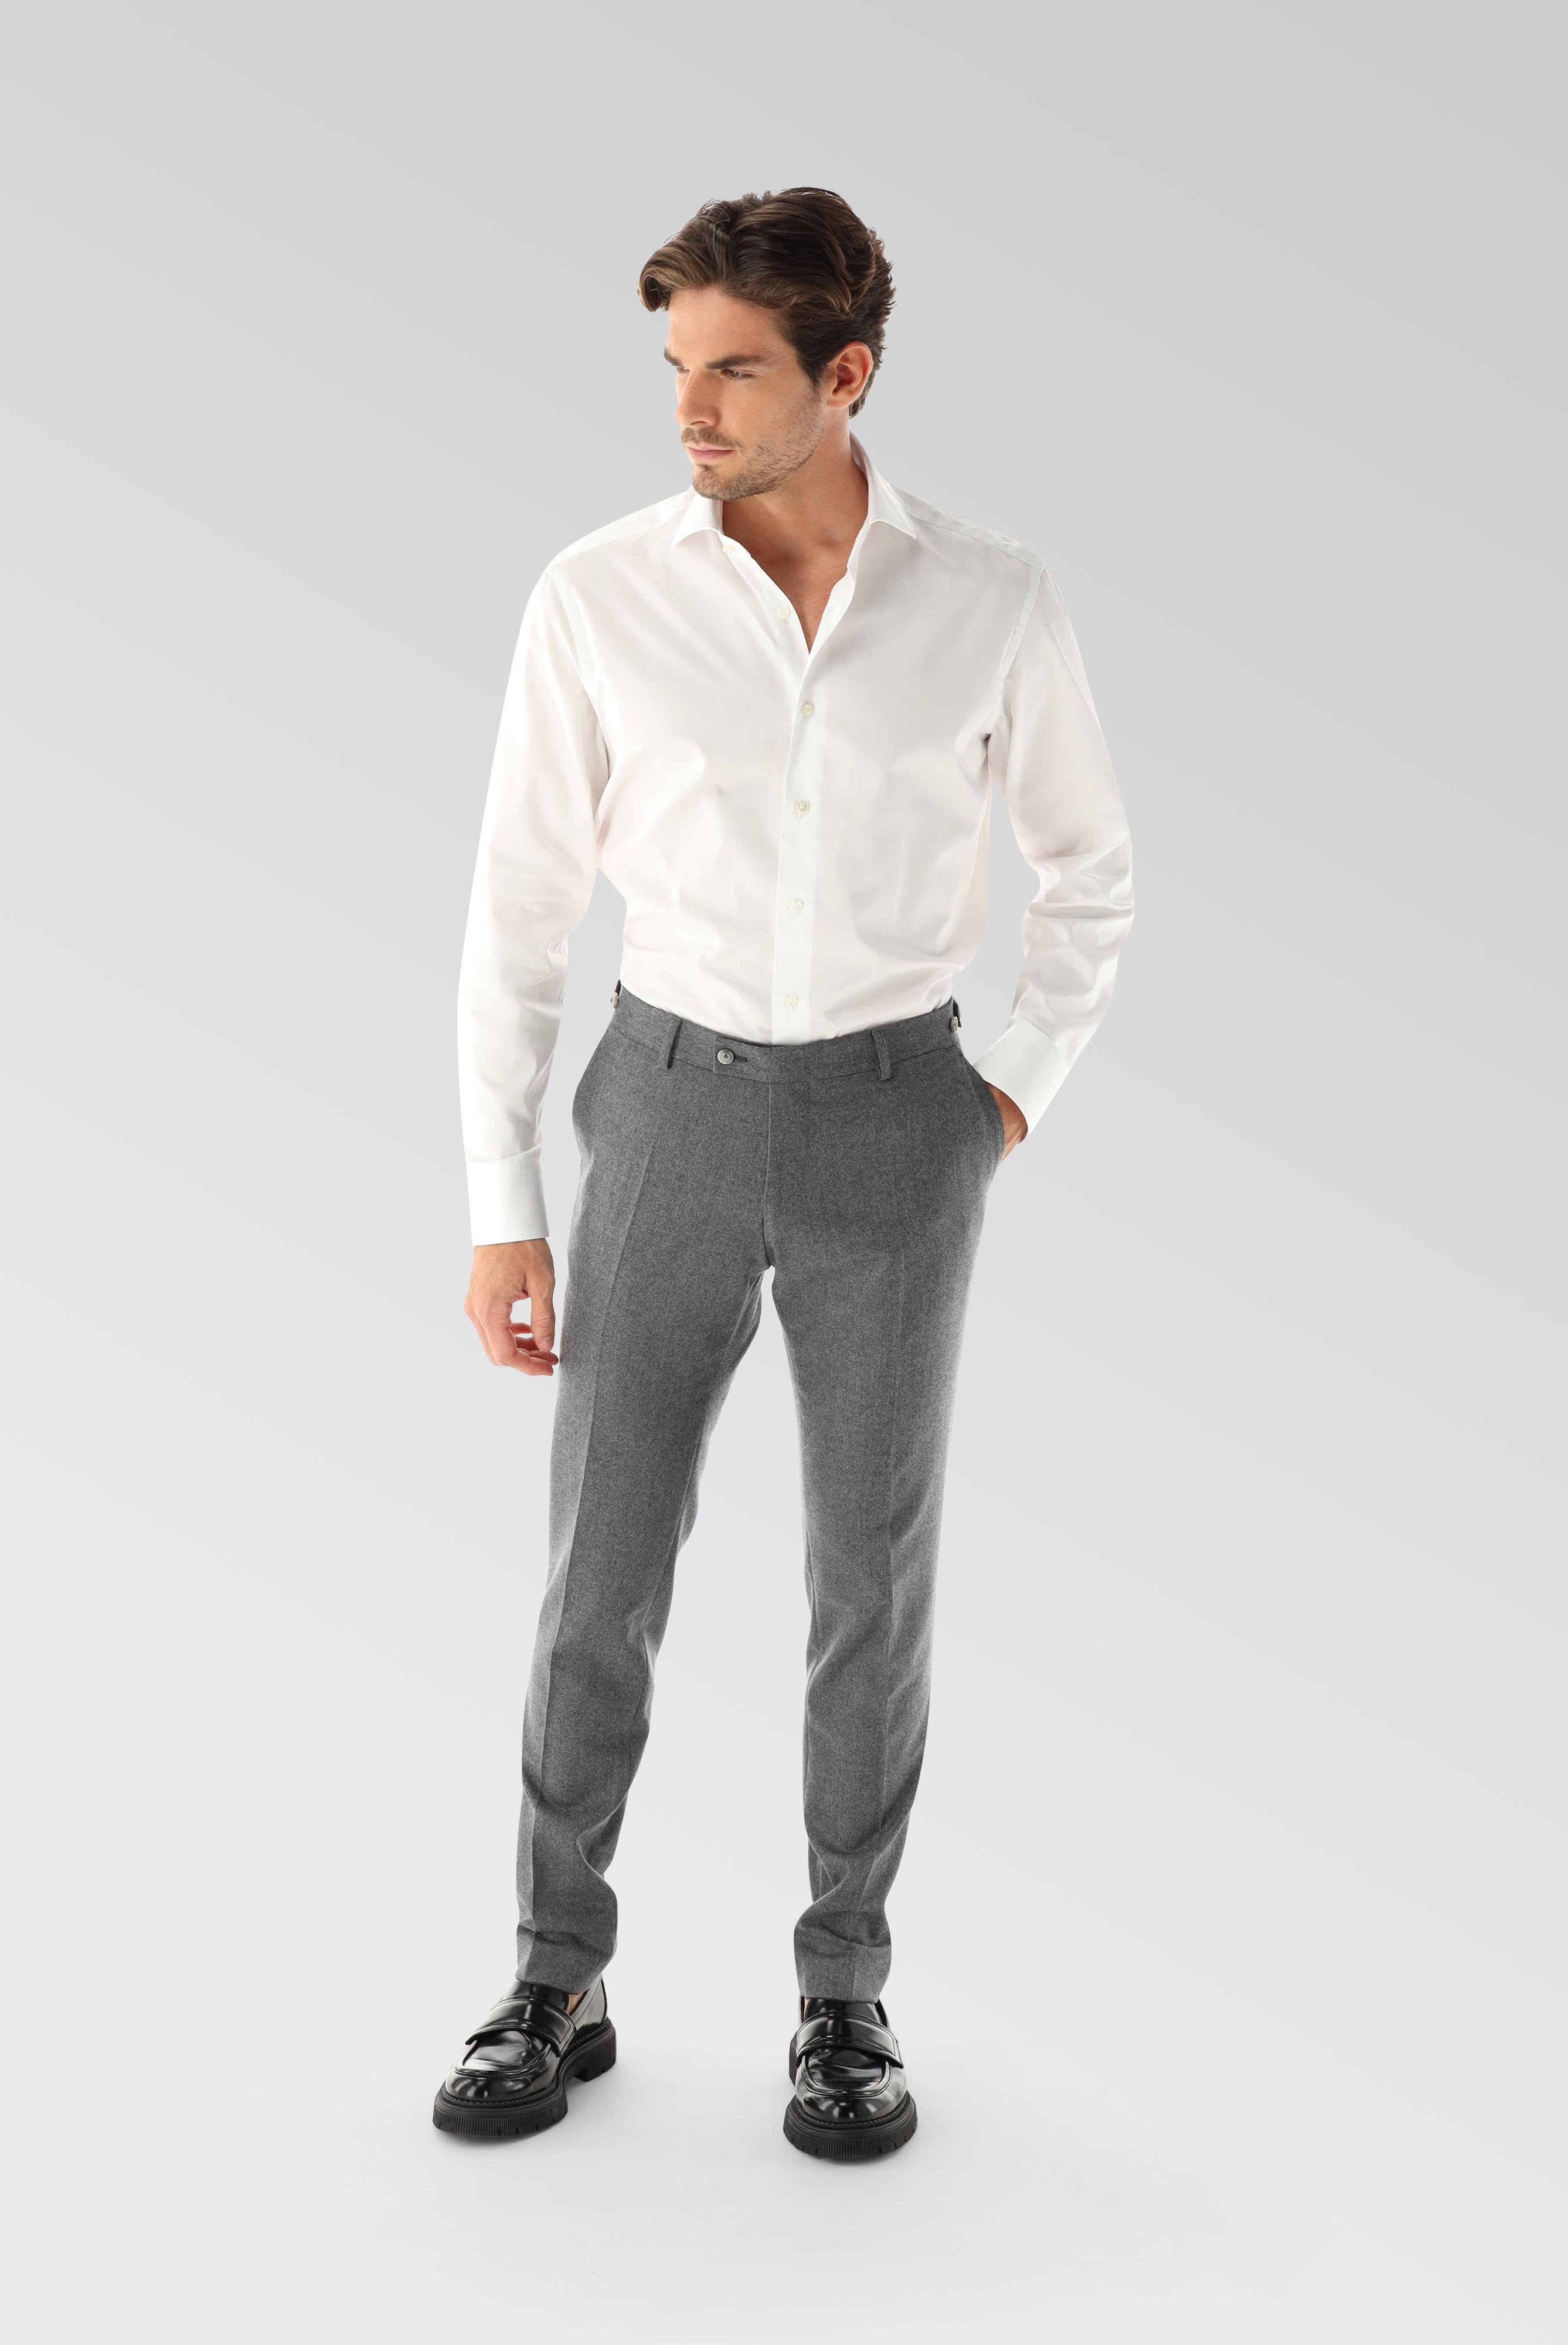 Meisterwerk Hemden+Businesshemd aus Baumwoll-Dobby Tailor Fit+20.2502.NV.130972.000.41